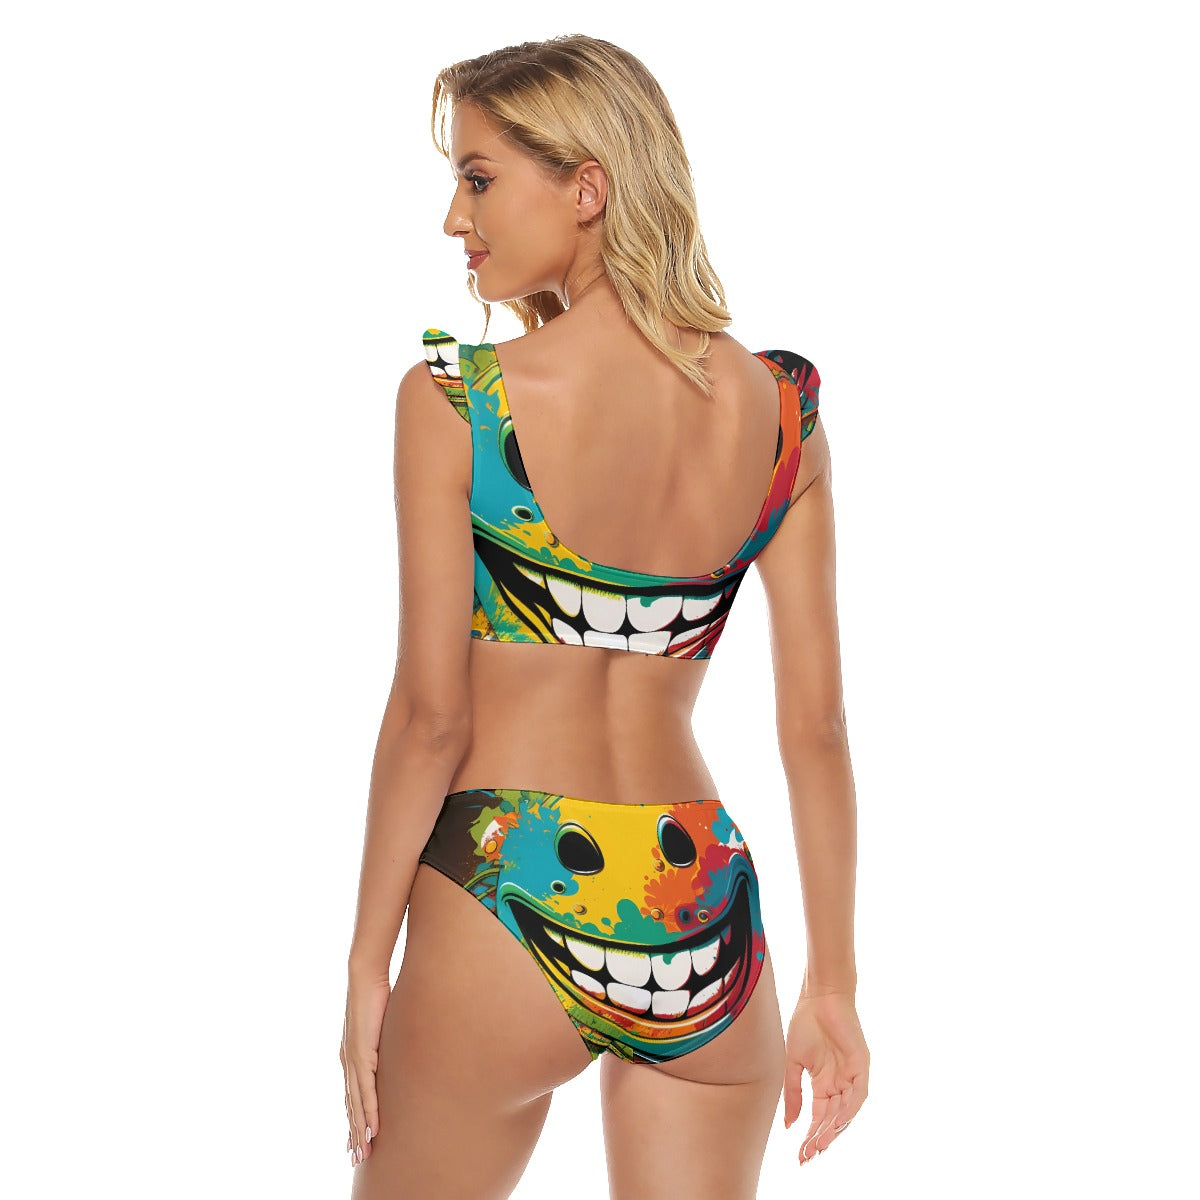 Why So Serious - All-Over Print Women's Bikini Swimsuit With Ruffle Cuff Bra